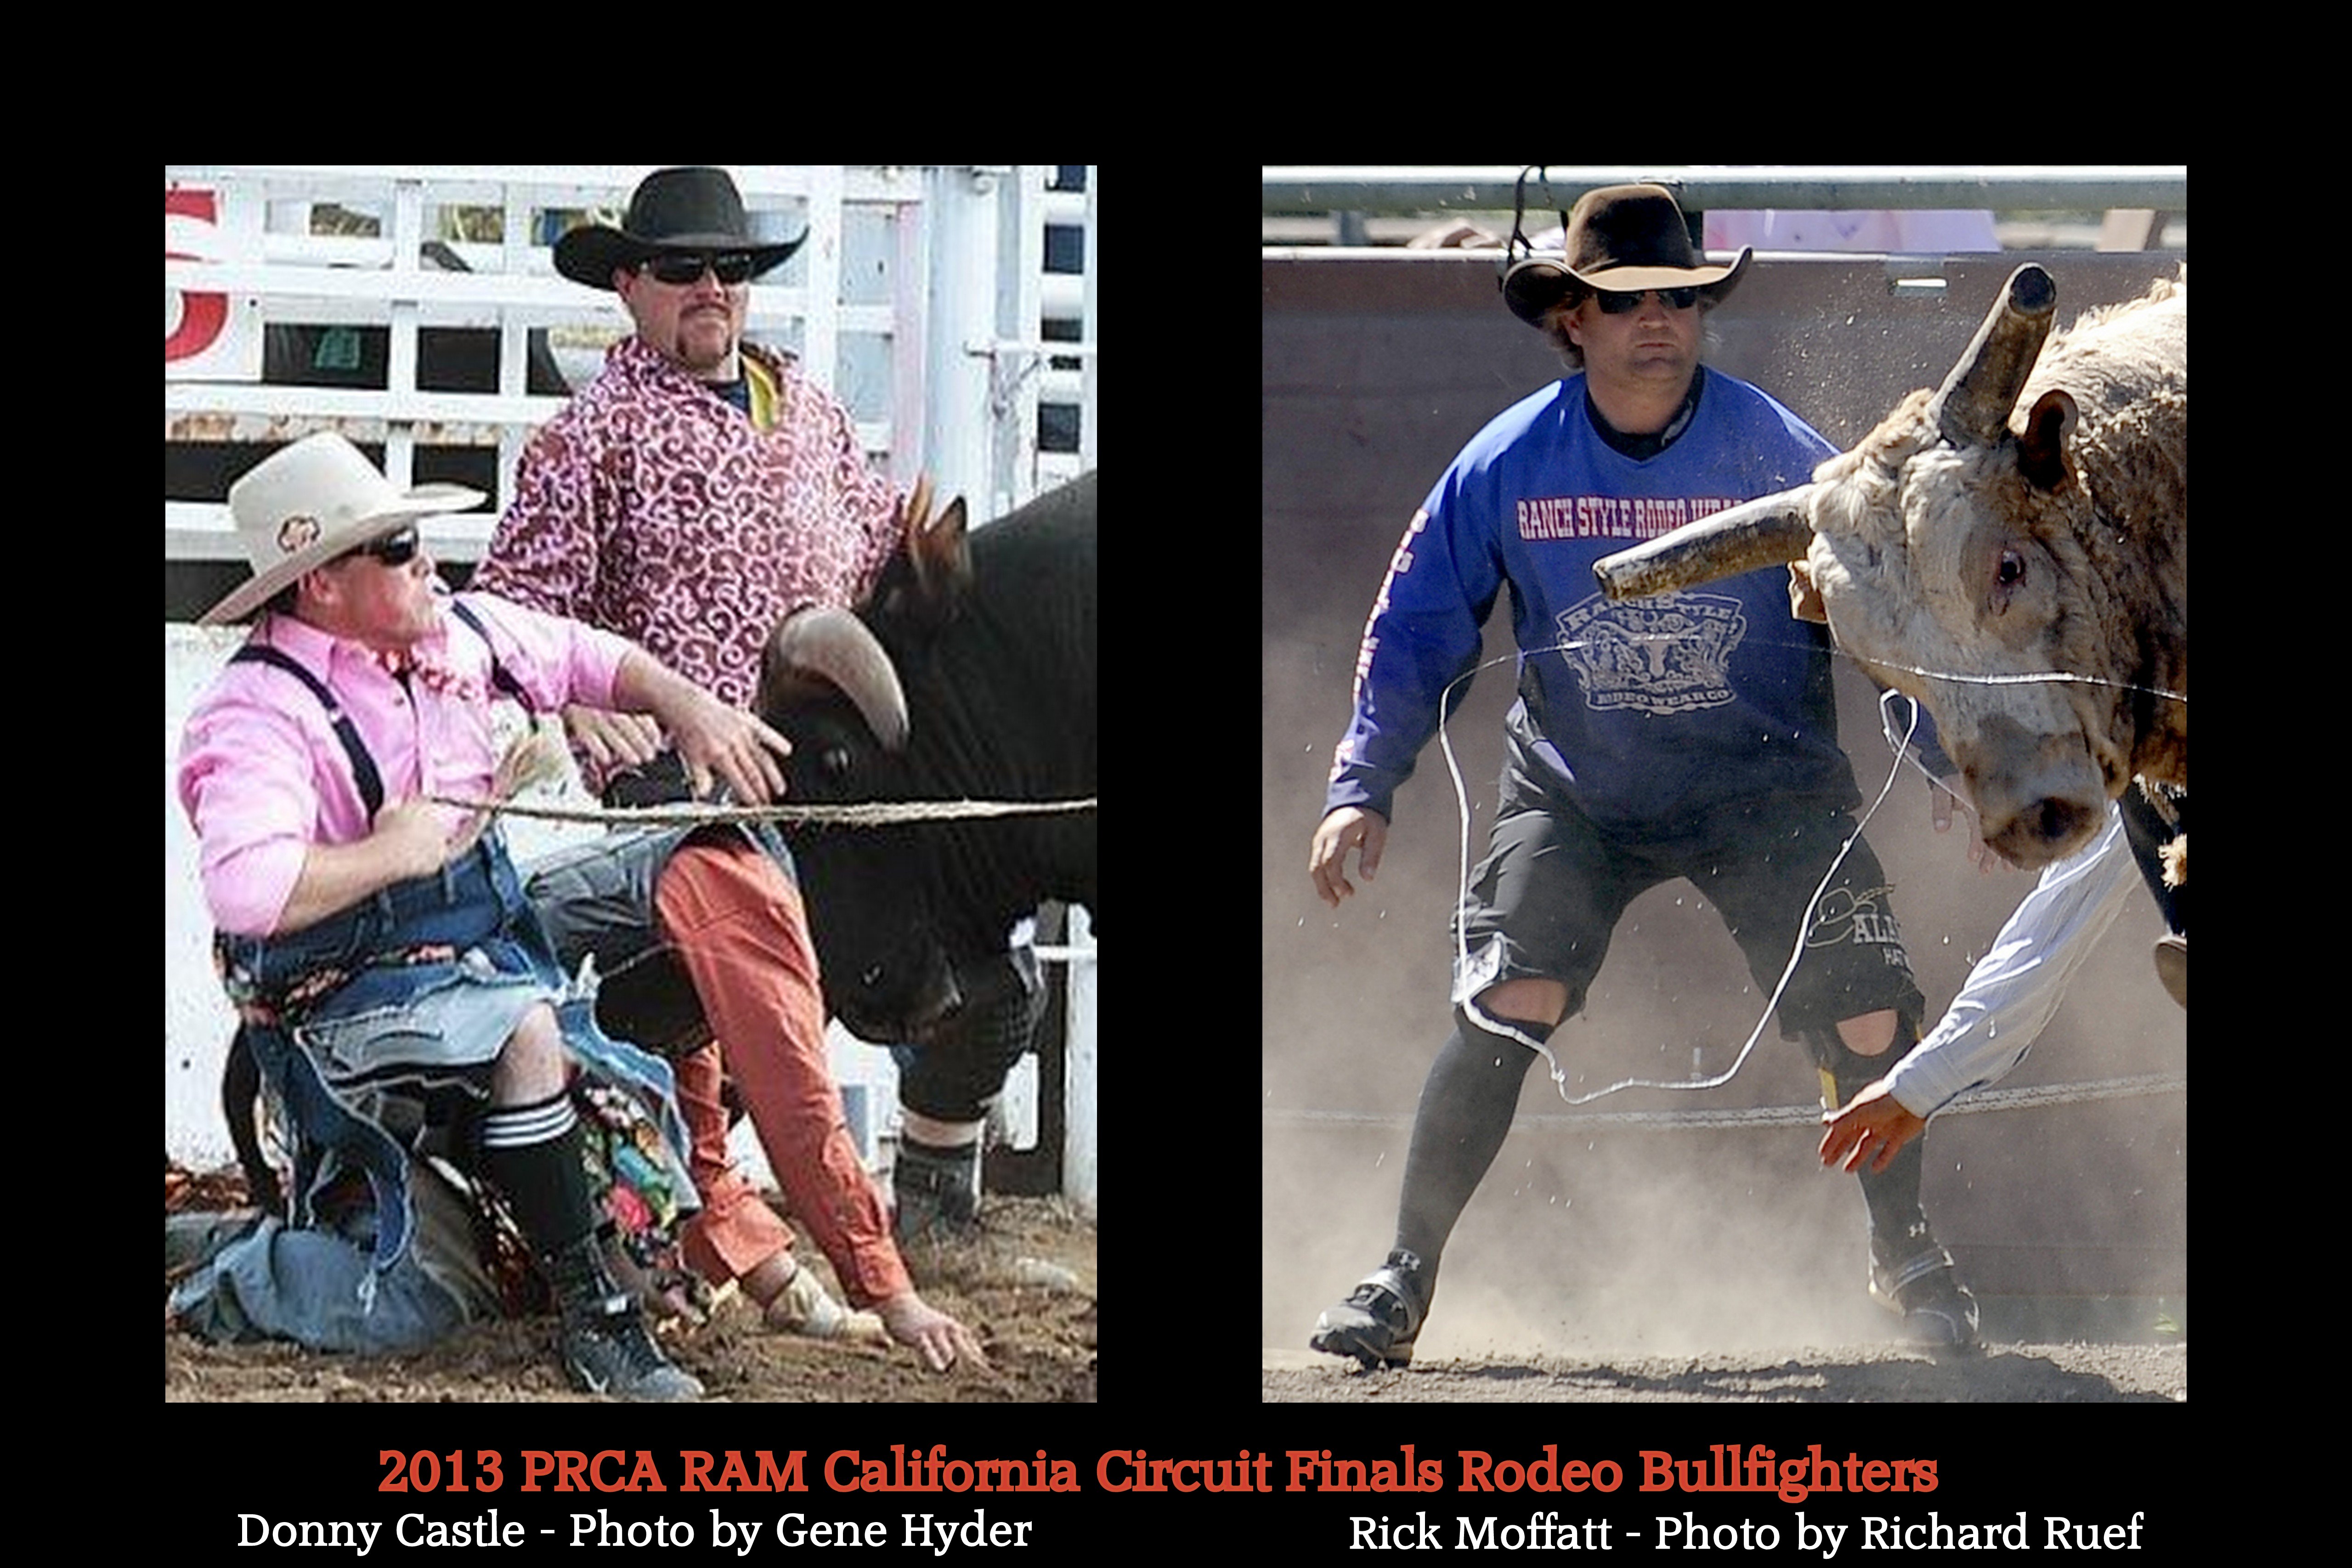 Please meet your Bullfighters for the 2013 PRCA RAM California Circuit Finals Rodeo – Donny Castle & Rick Moffatt